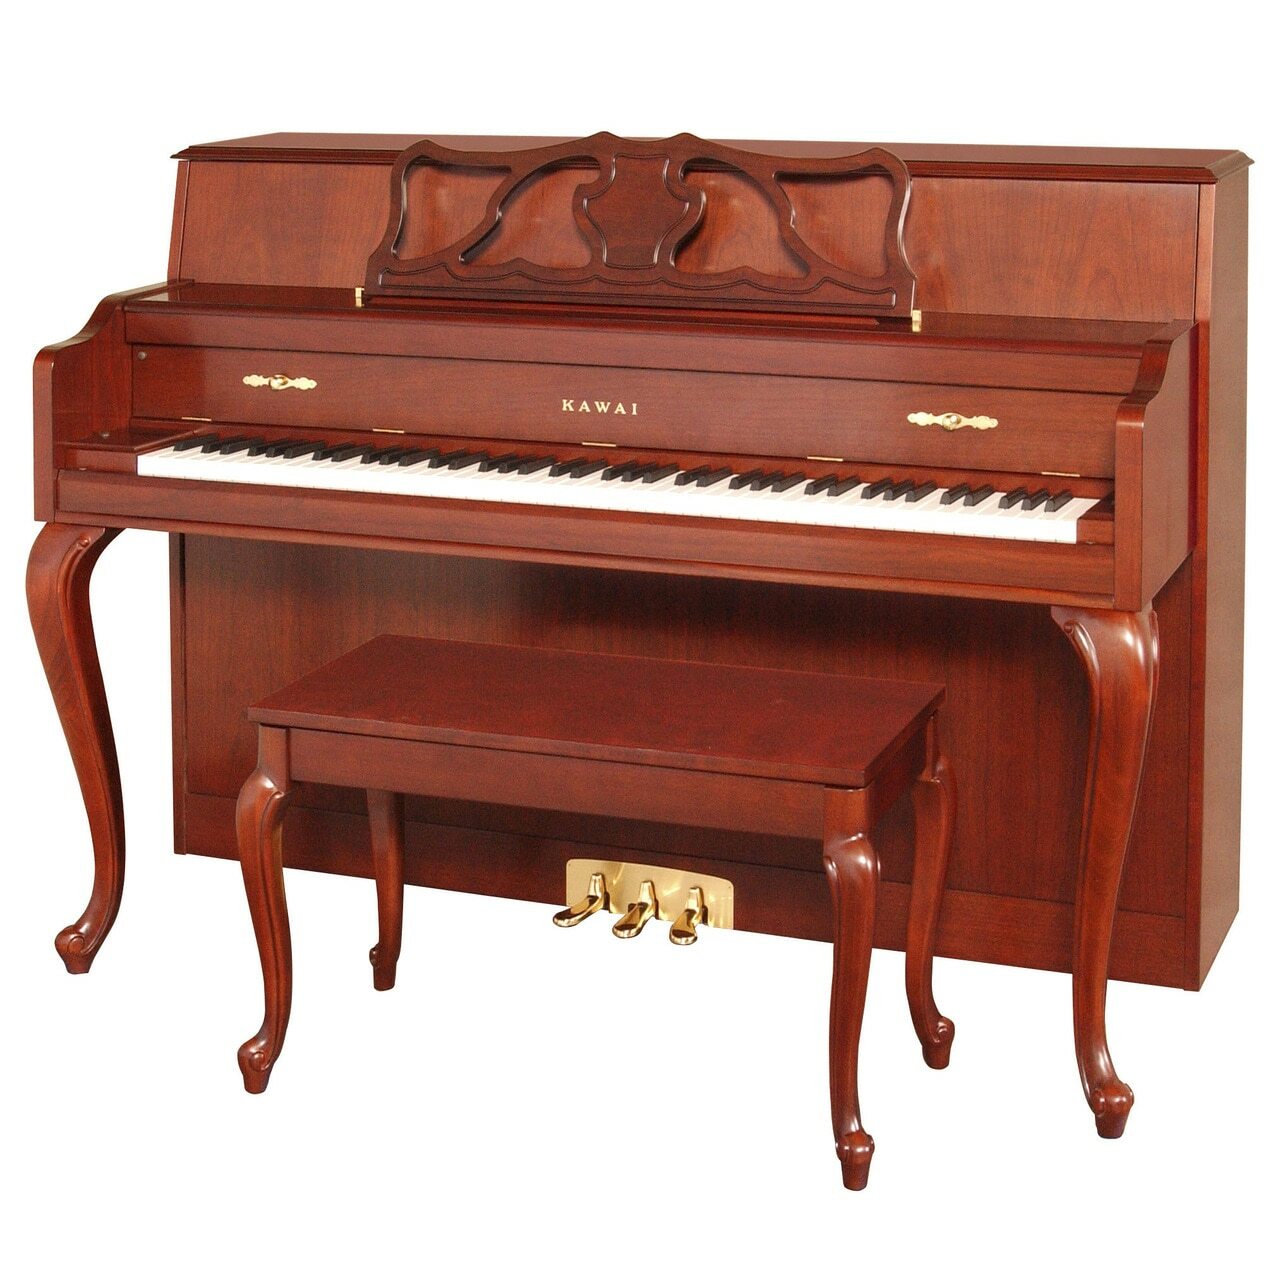 Kawai 44.5" 607 Designer Console Piano | French Provincial Cherry Finish | New